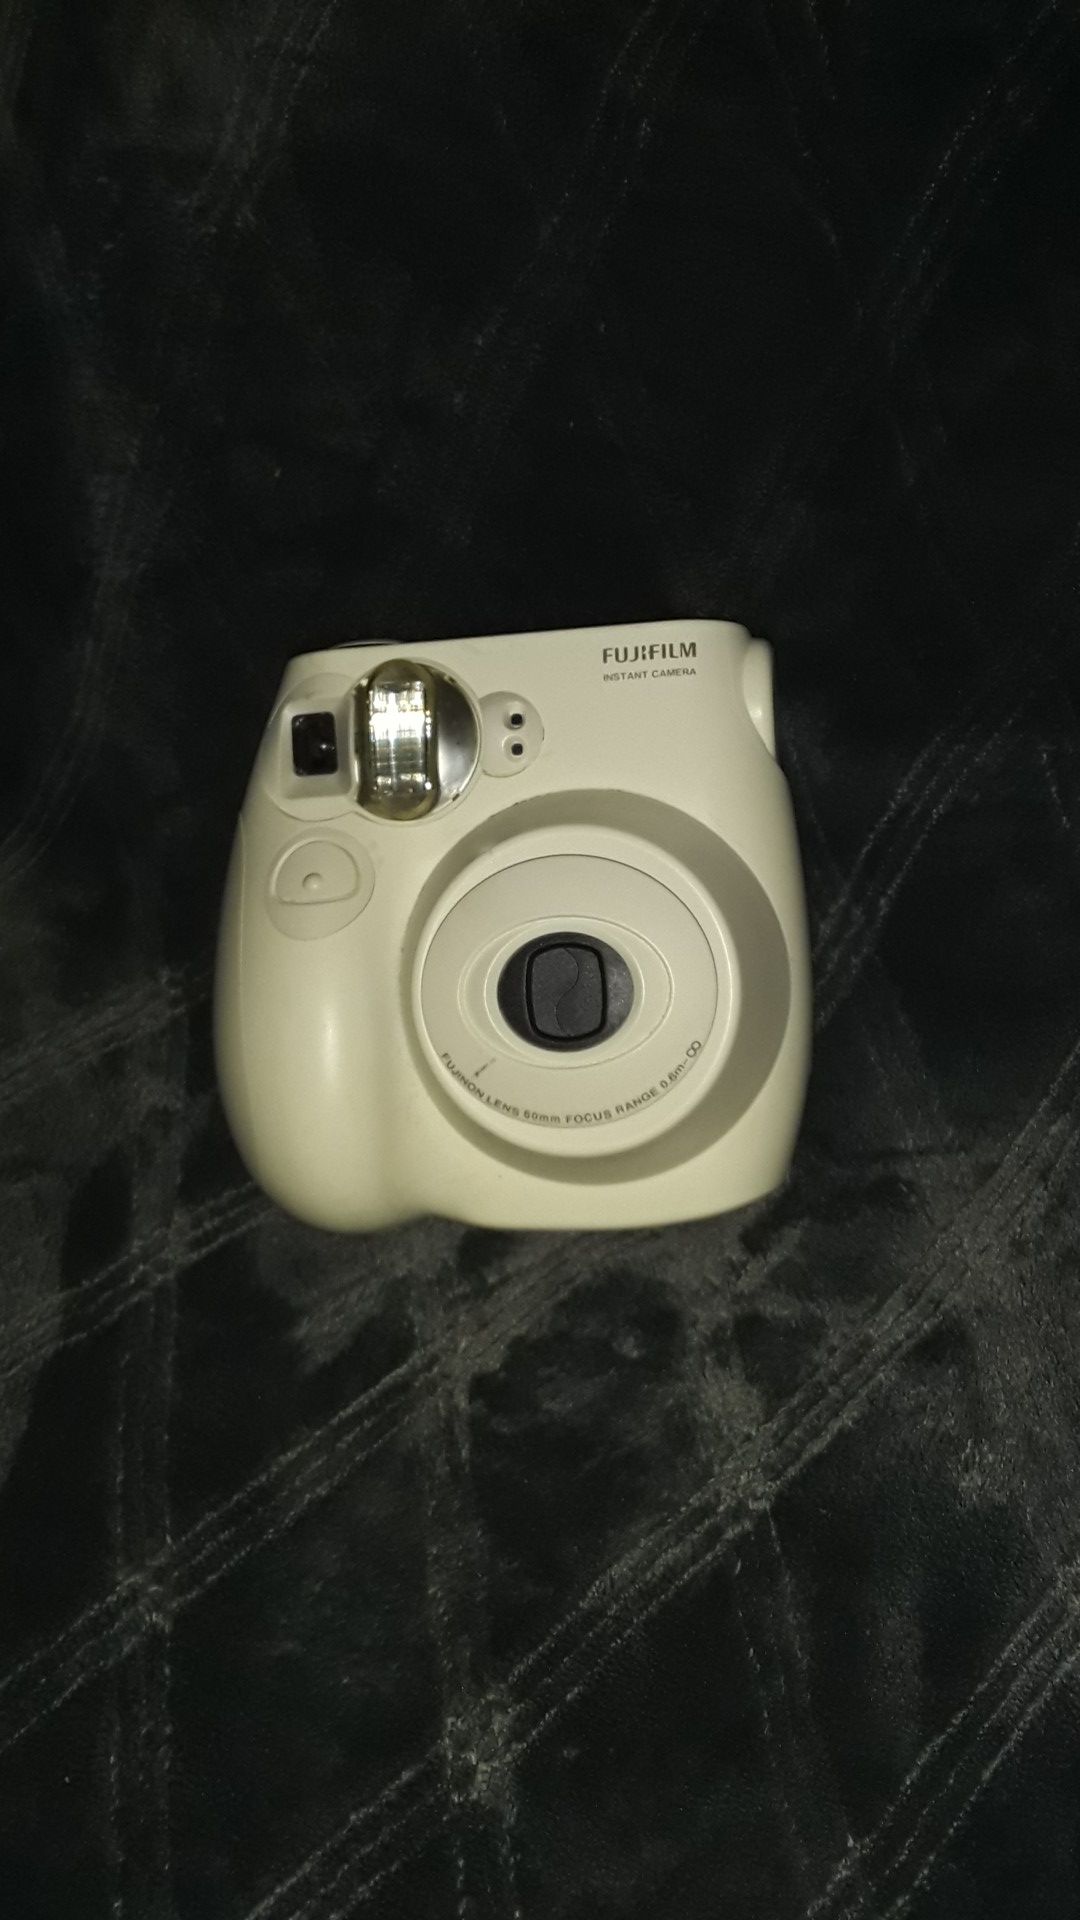 Fuji film instax camera